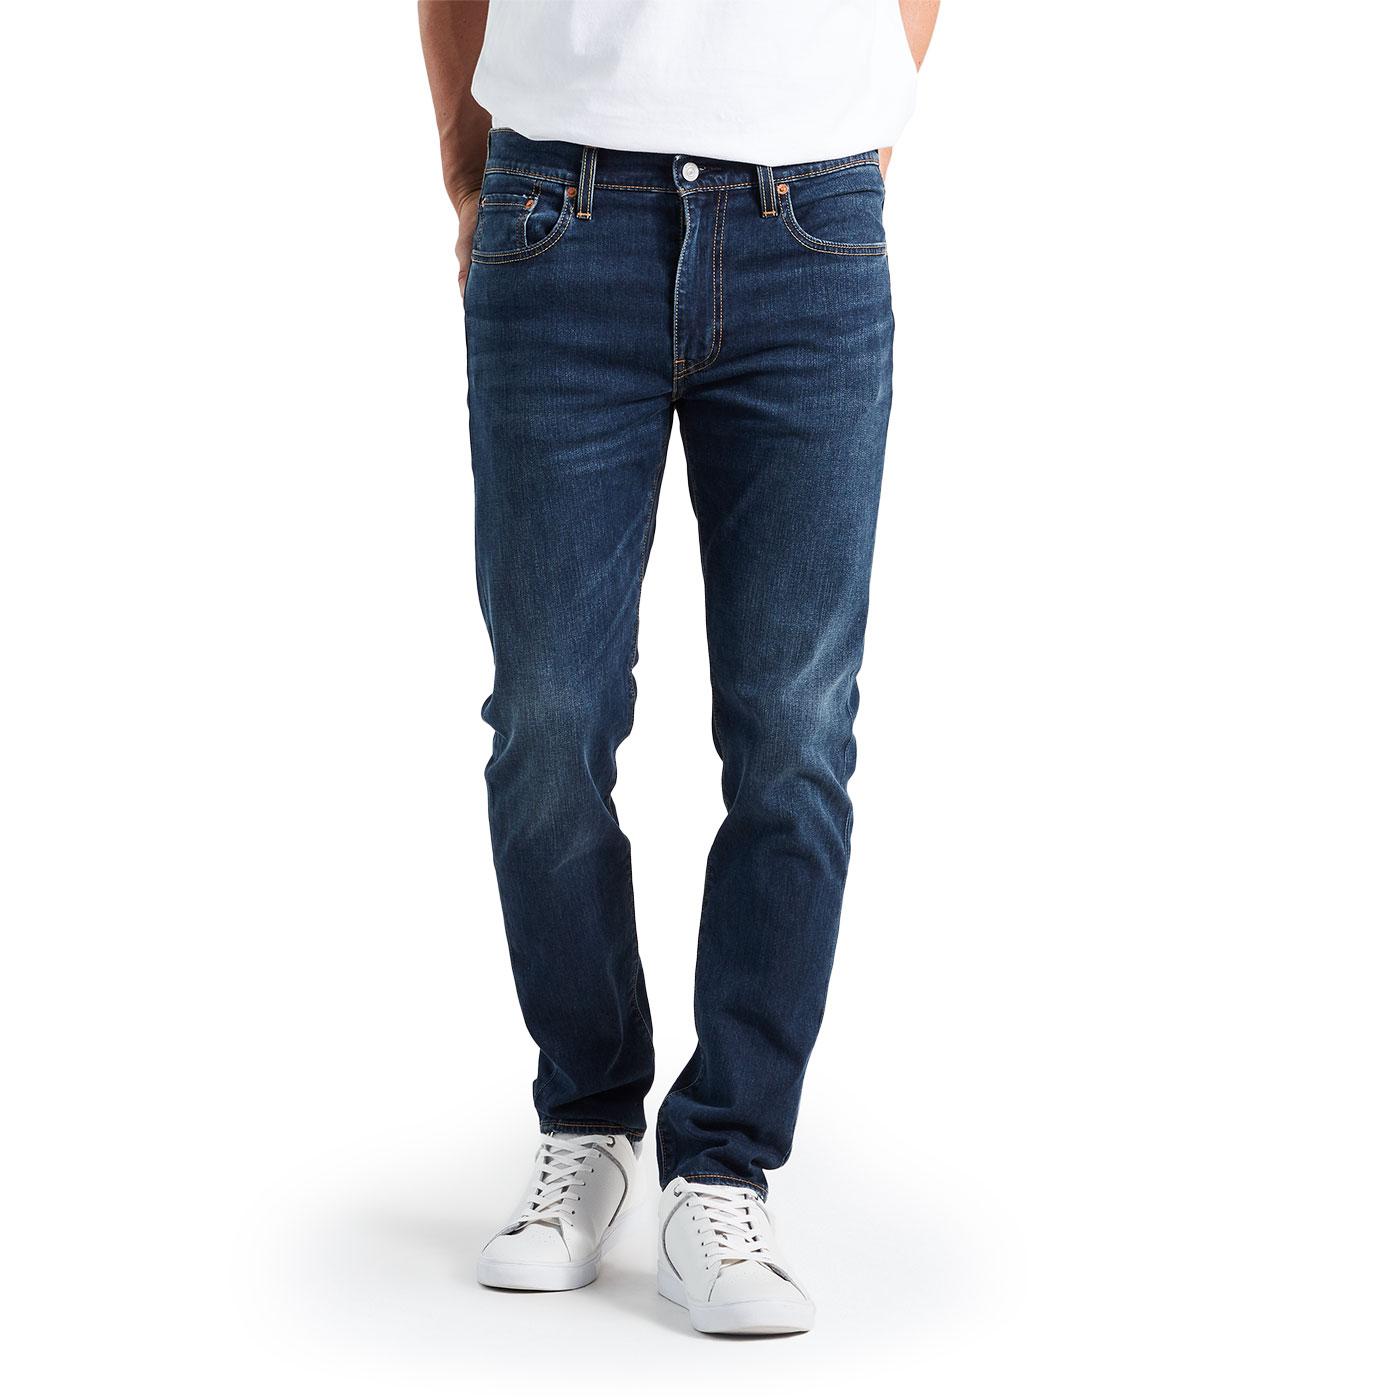 arizona advance flex 360 jeans